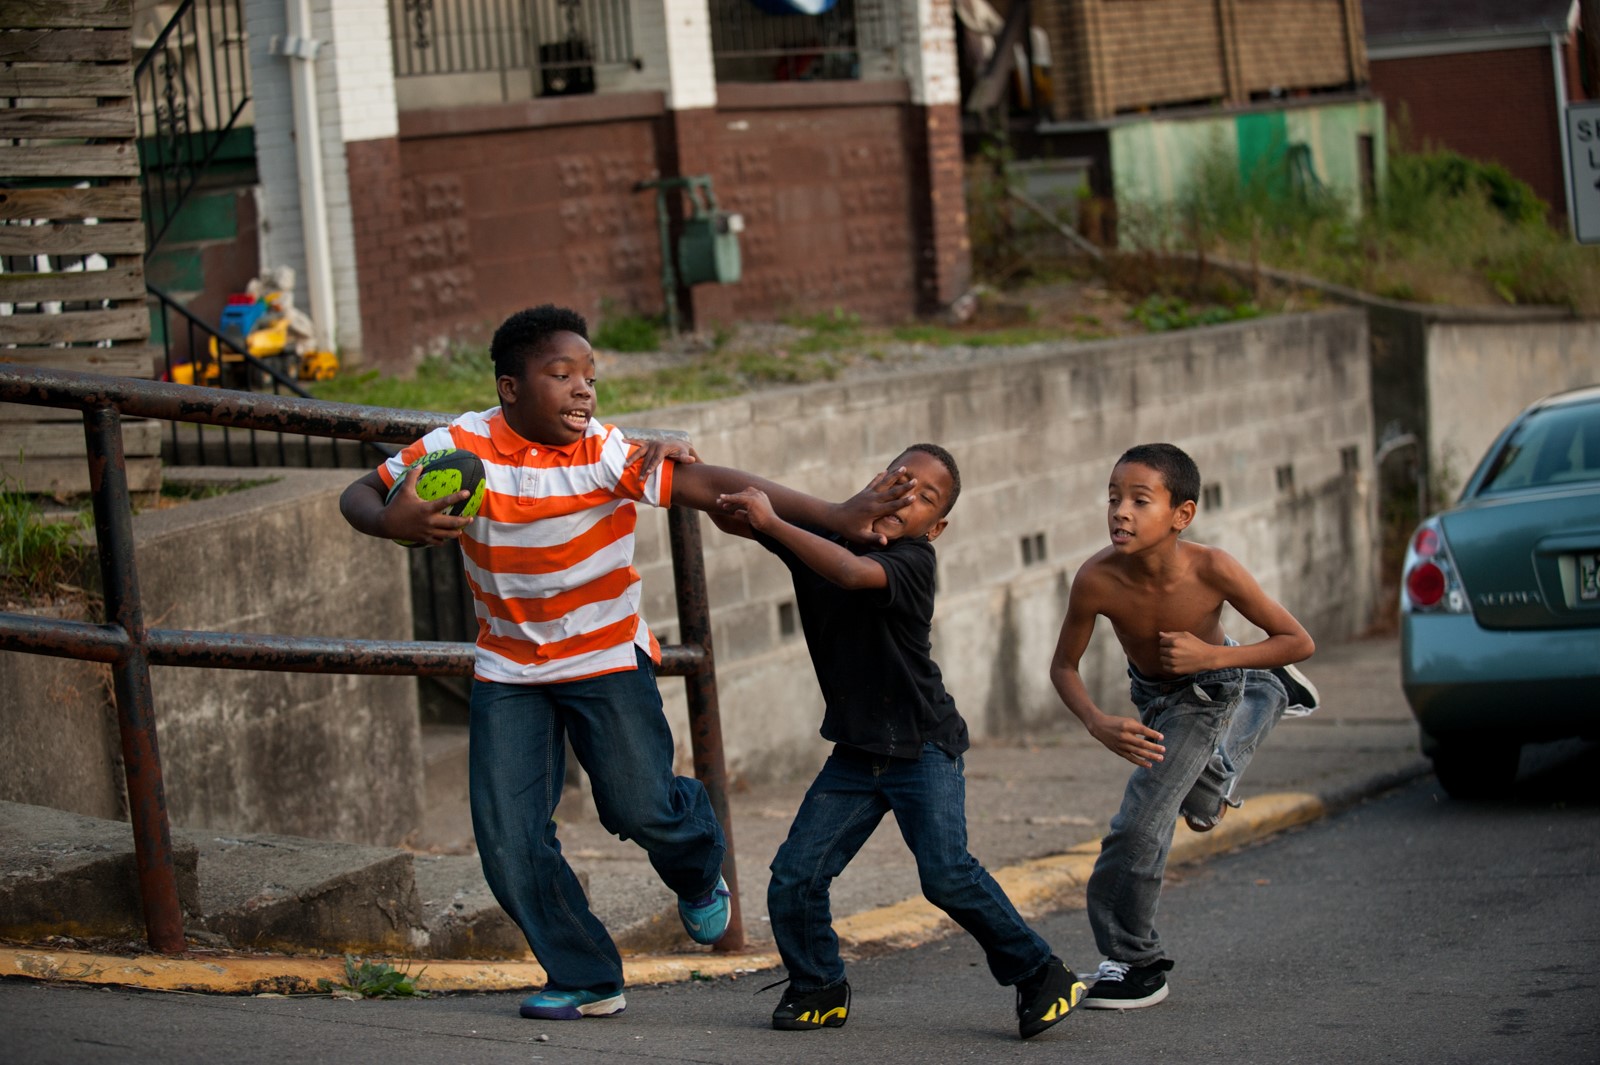 Three kids play football in the street.